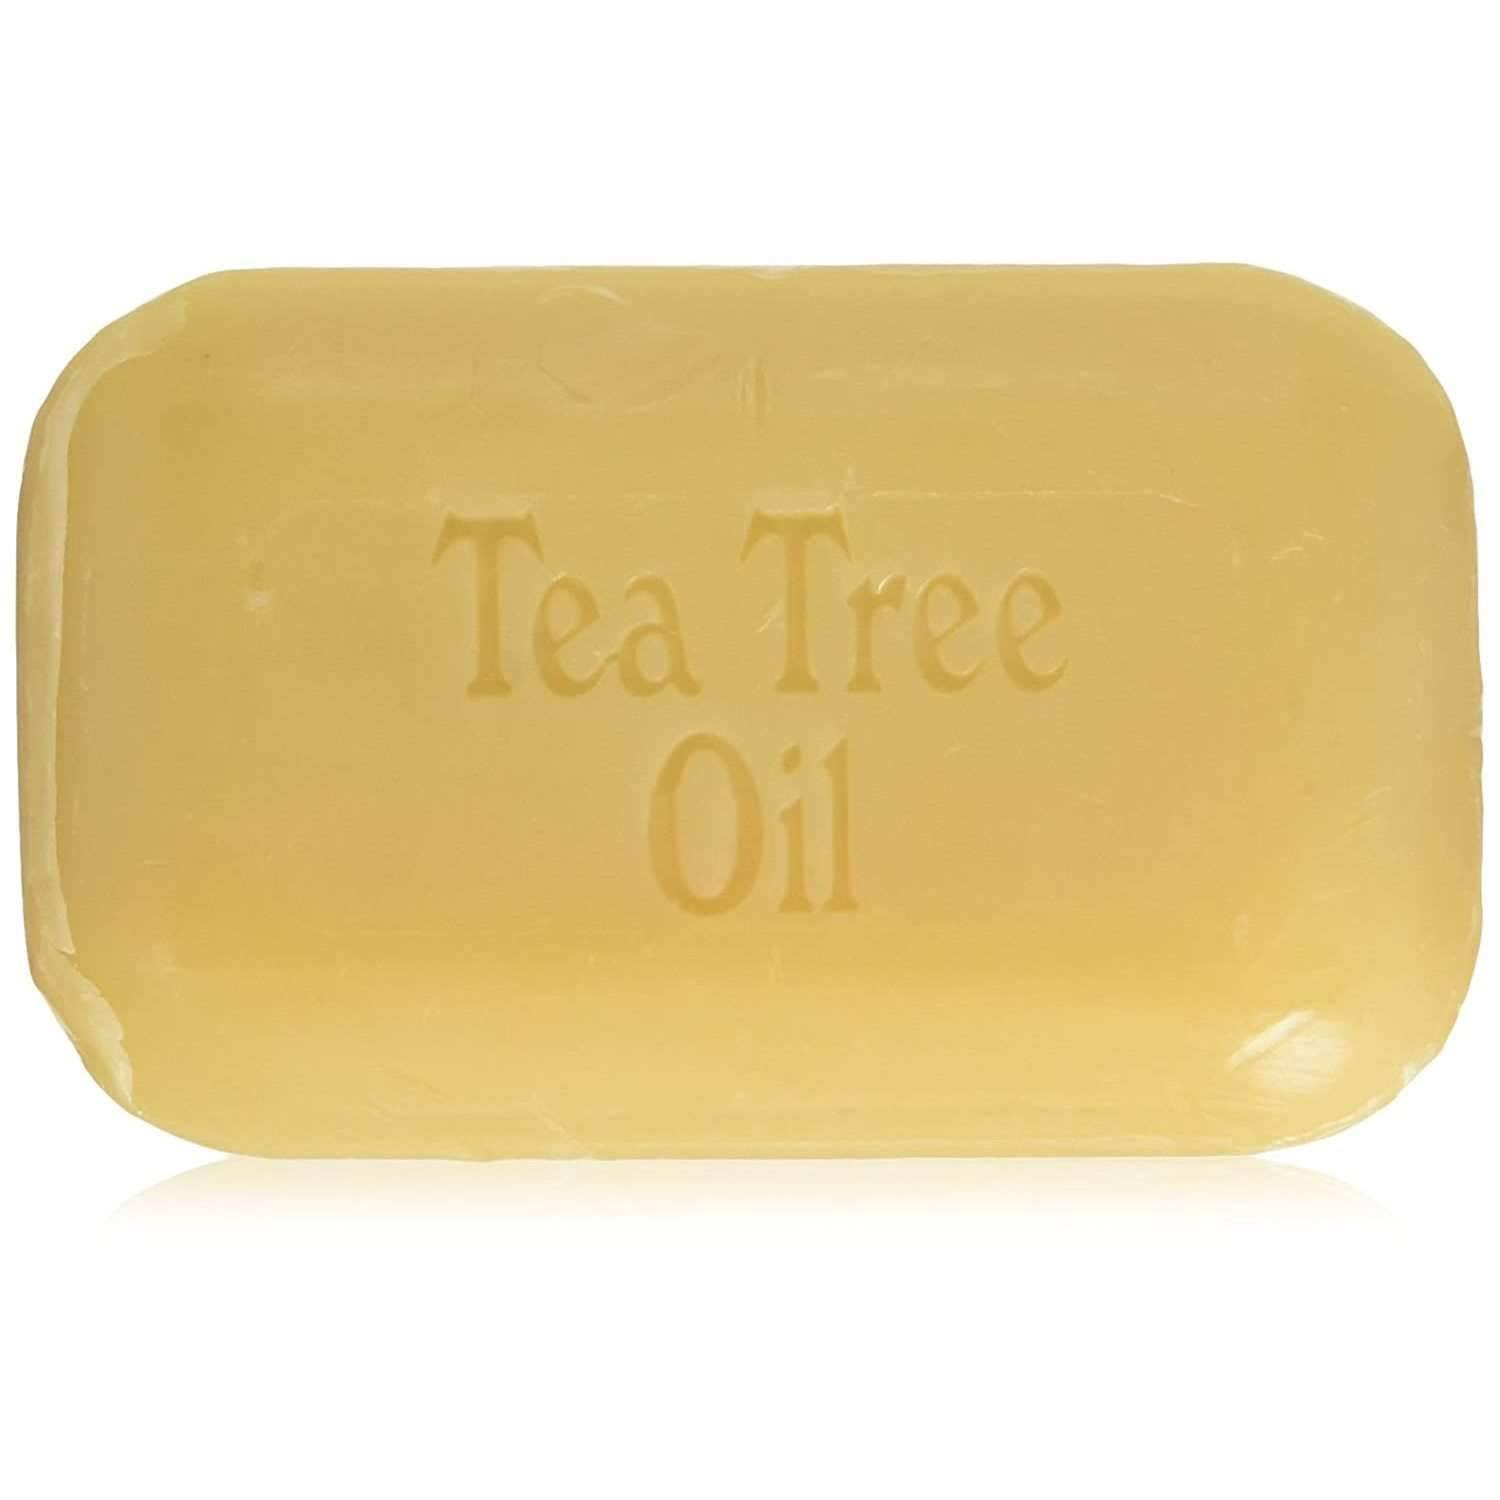 Soap Works Tea Tree Oil Soap 110 g